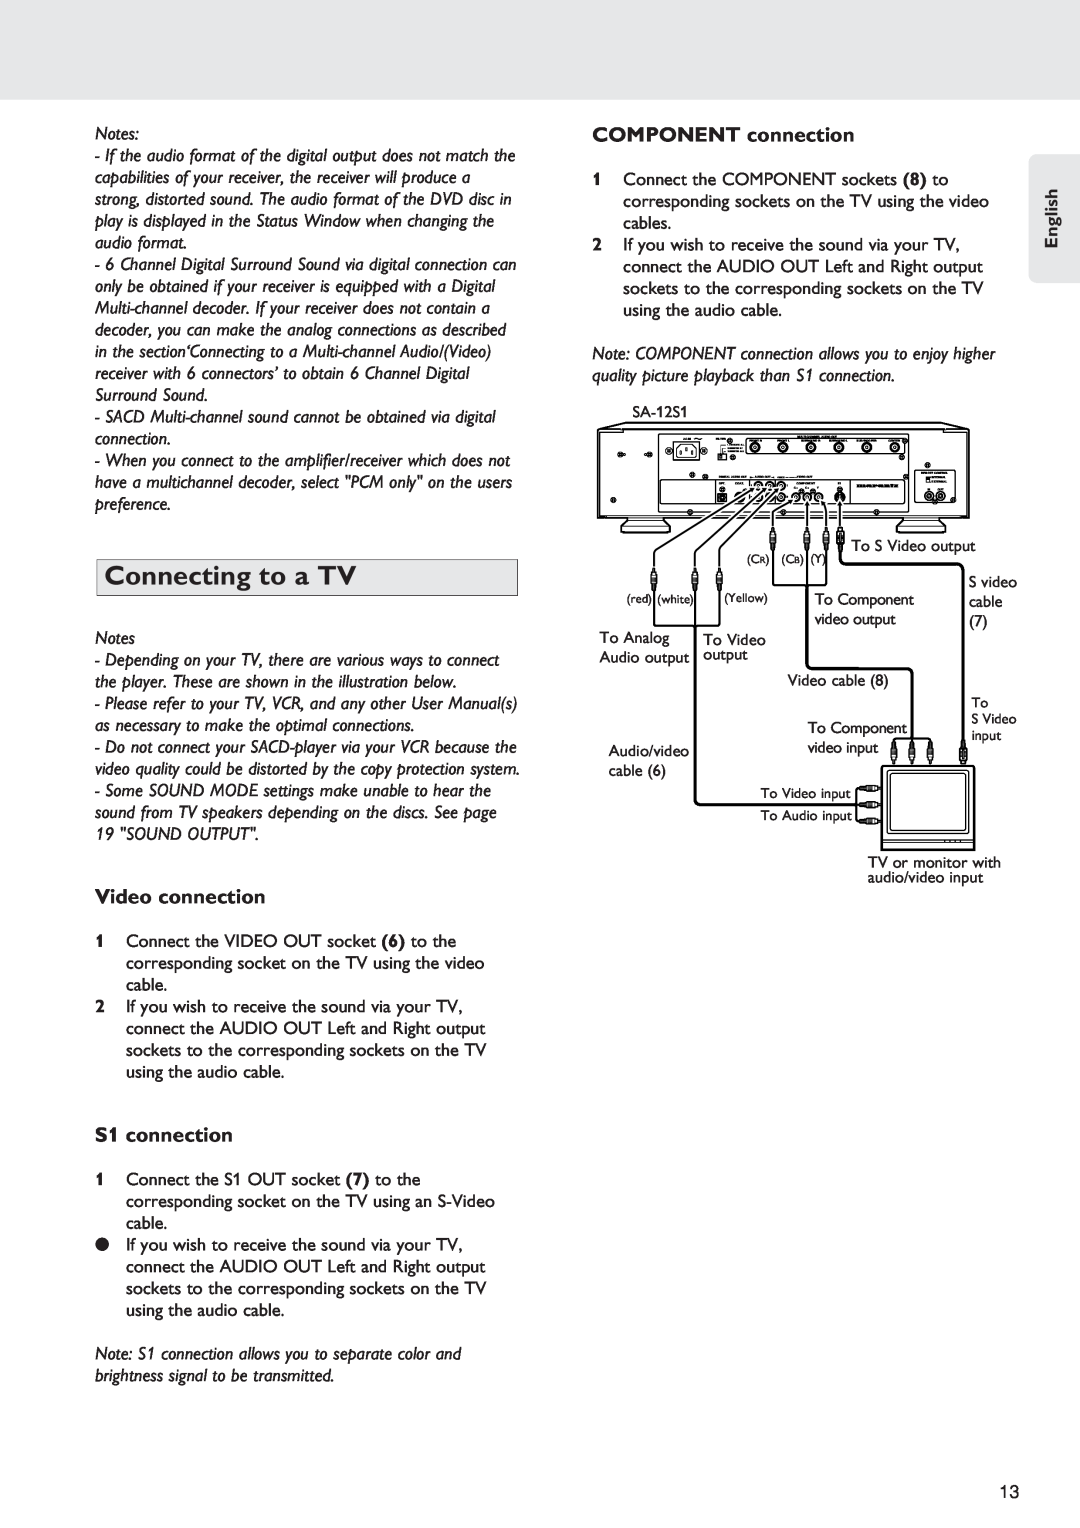 Marantz SA-12S1 manual Connecting to a TV, COMPONENT connection, Video connection, S1 connection, English 